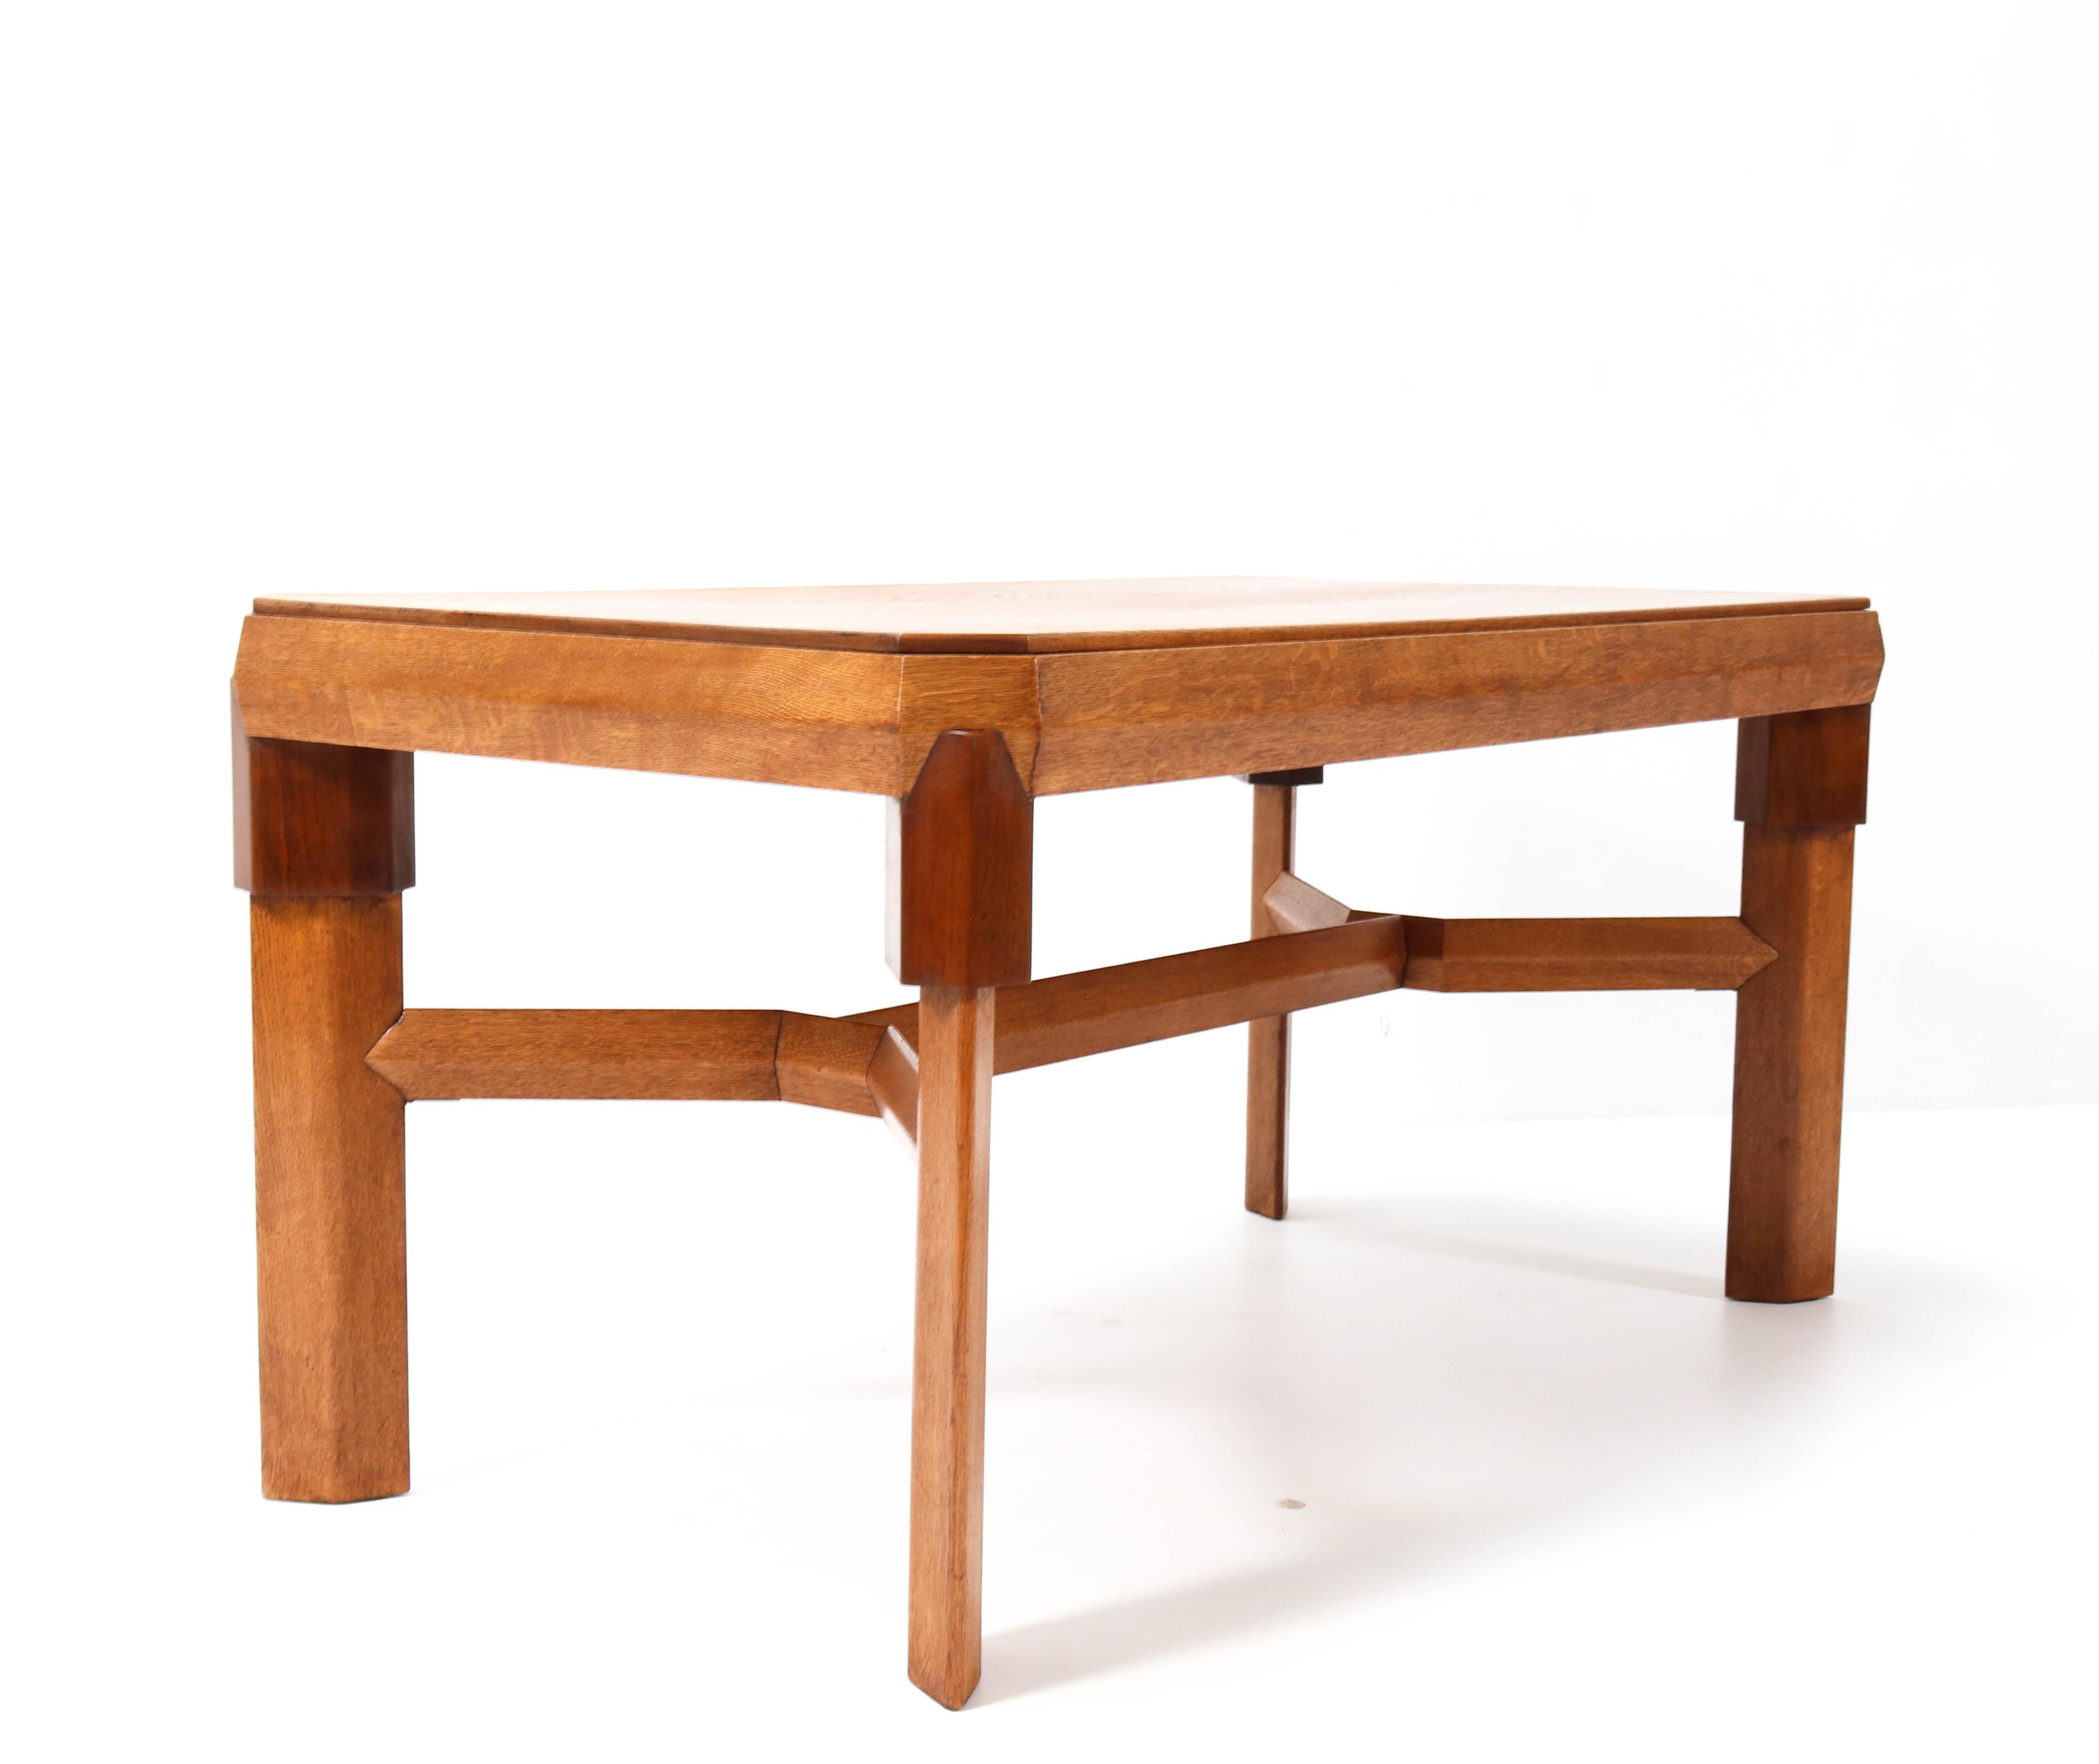 Oak Art Deco Amsterdamse School Table or Writing Table by Willem Retera Wzn 2